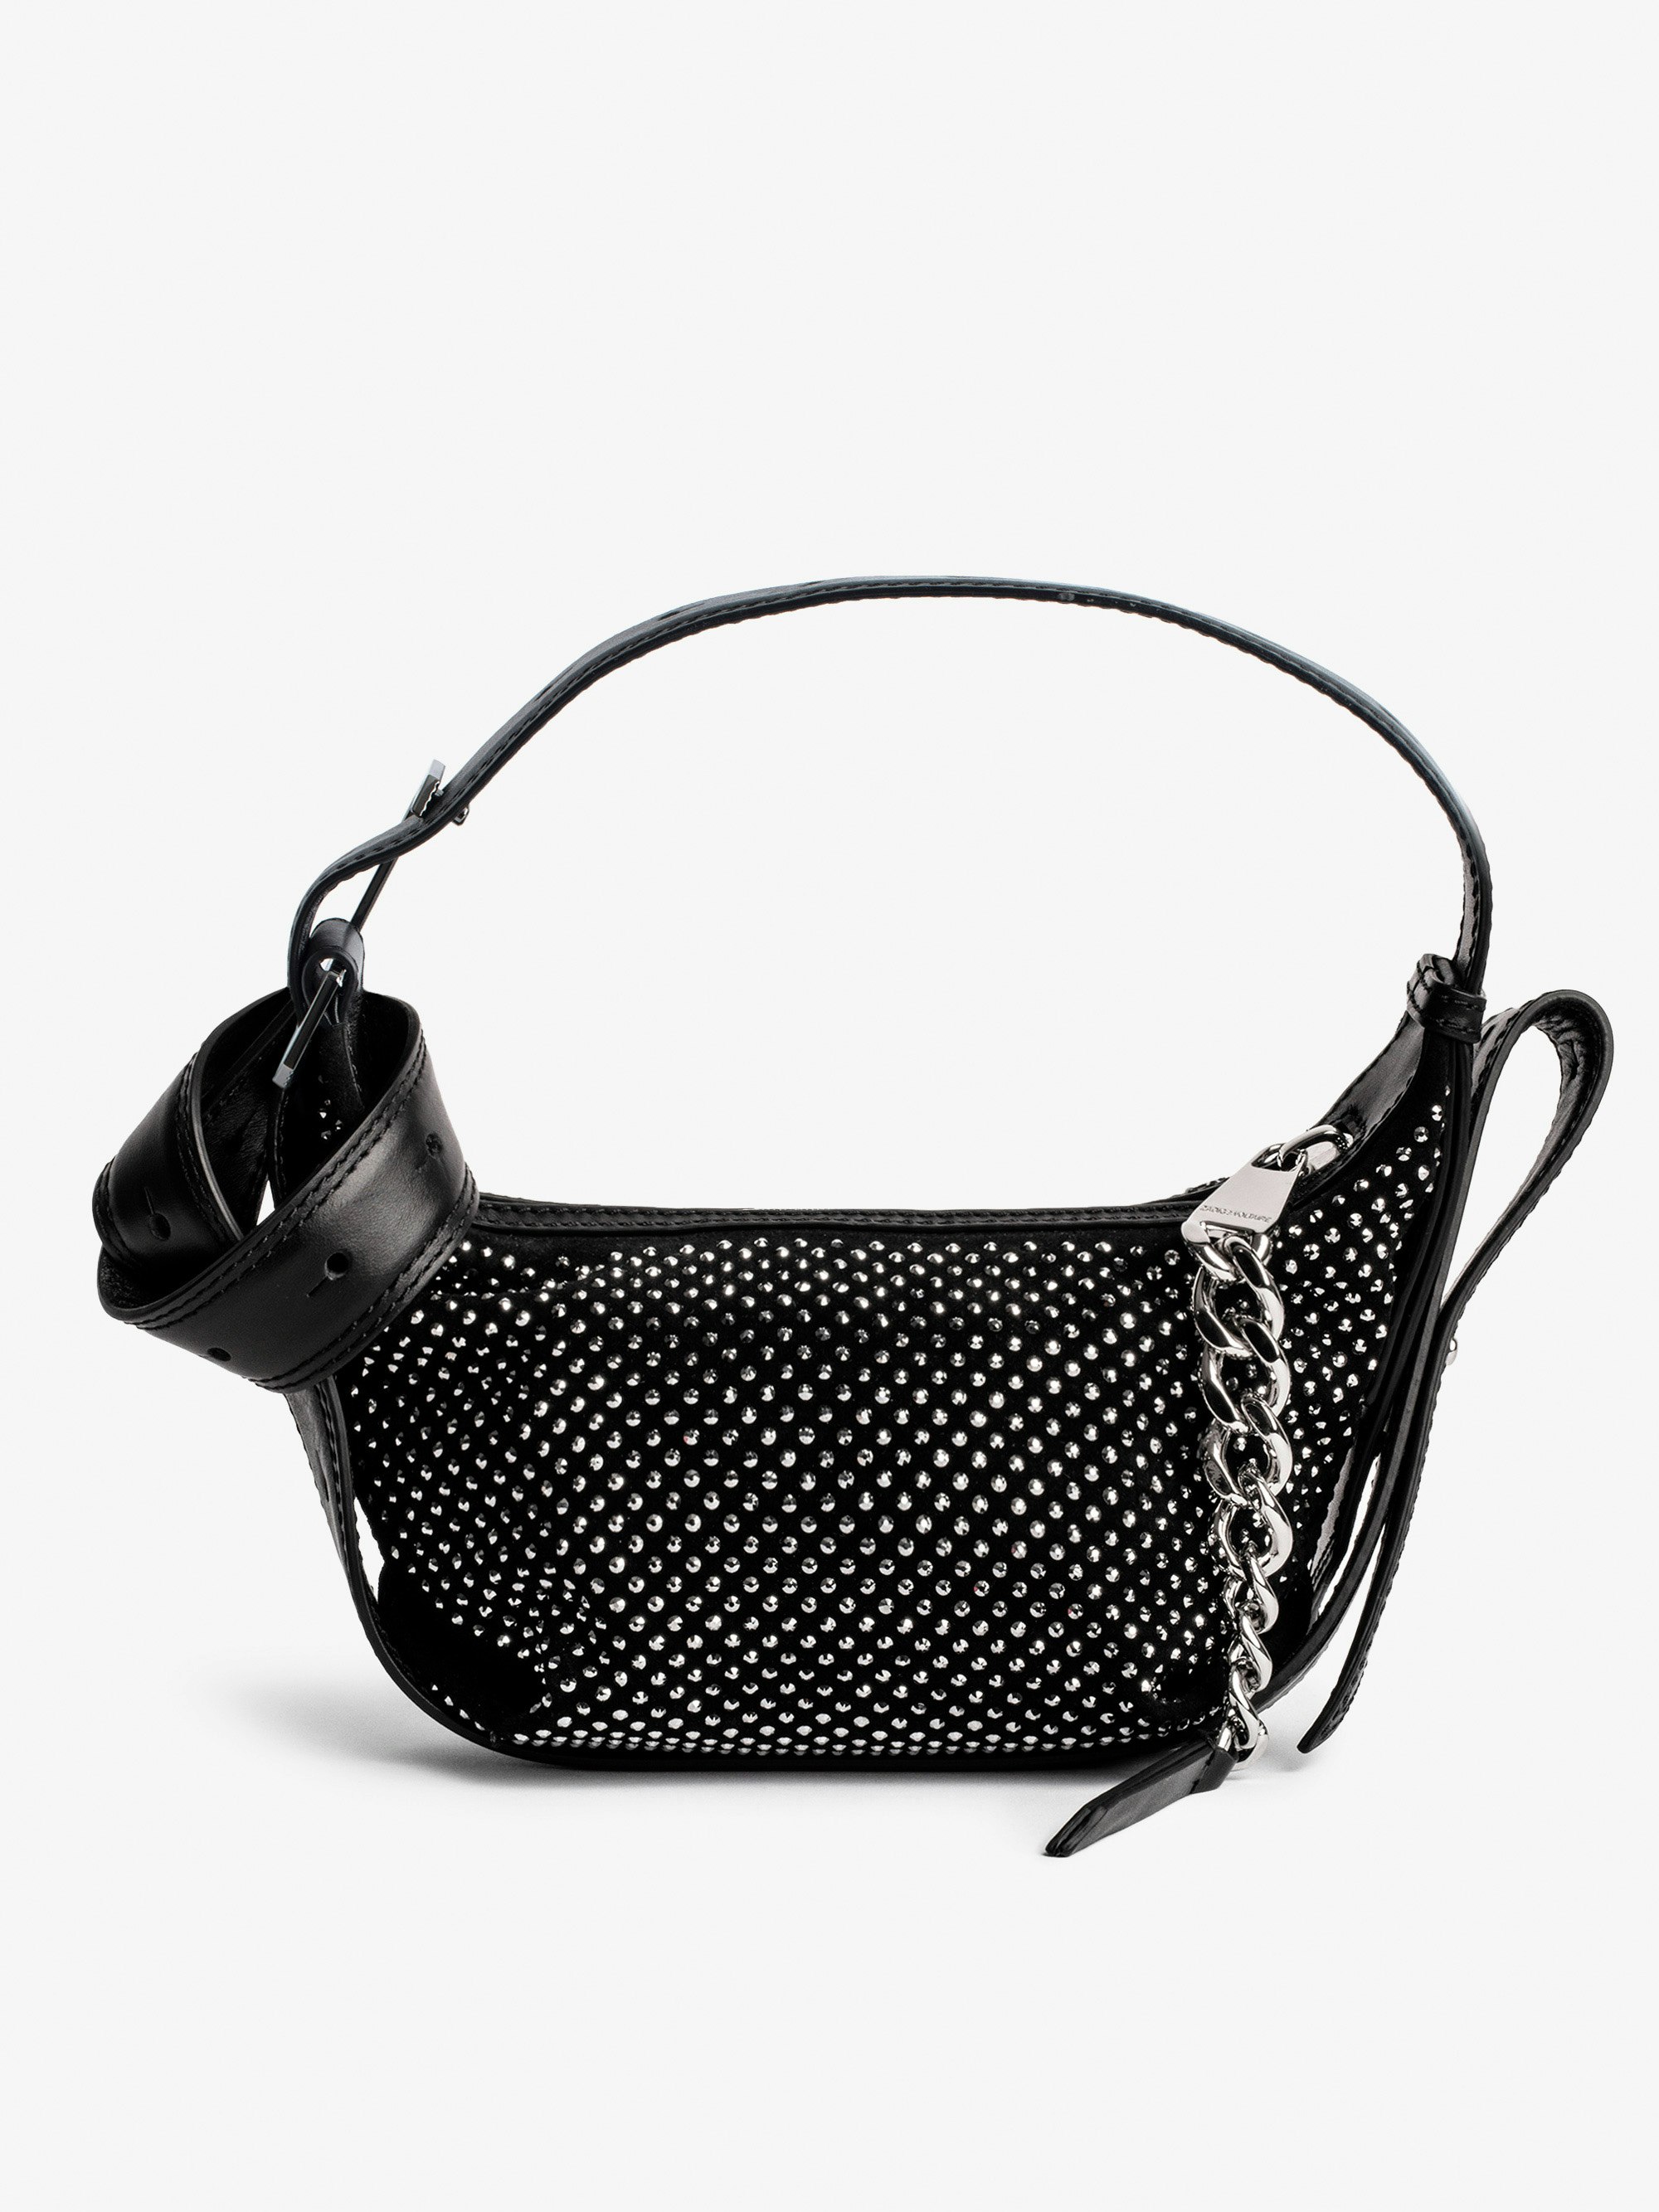 Le Cecilia XS Strass Bag - Women's black suede shoulder bag with rhinestones.